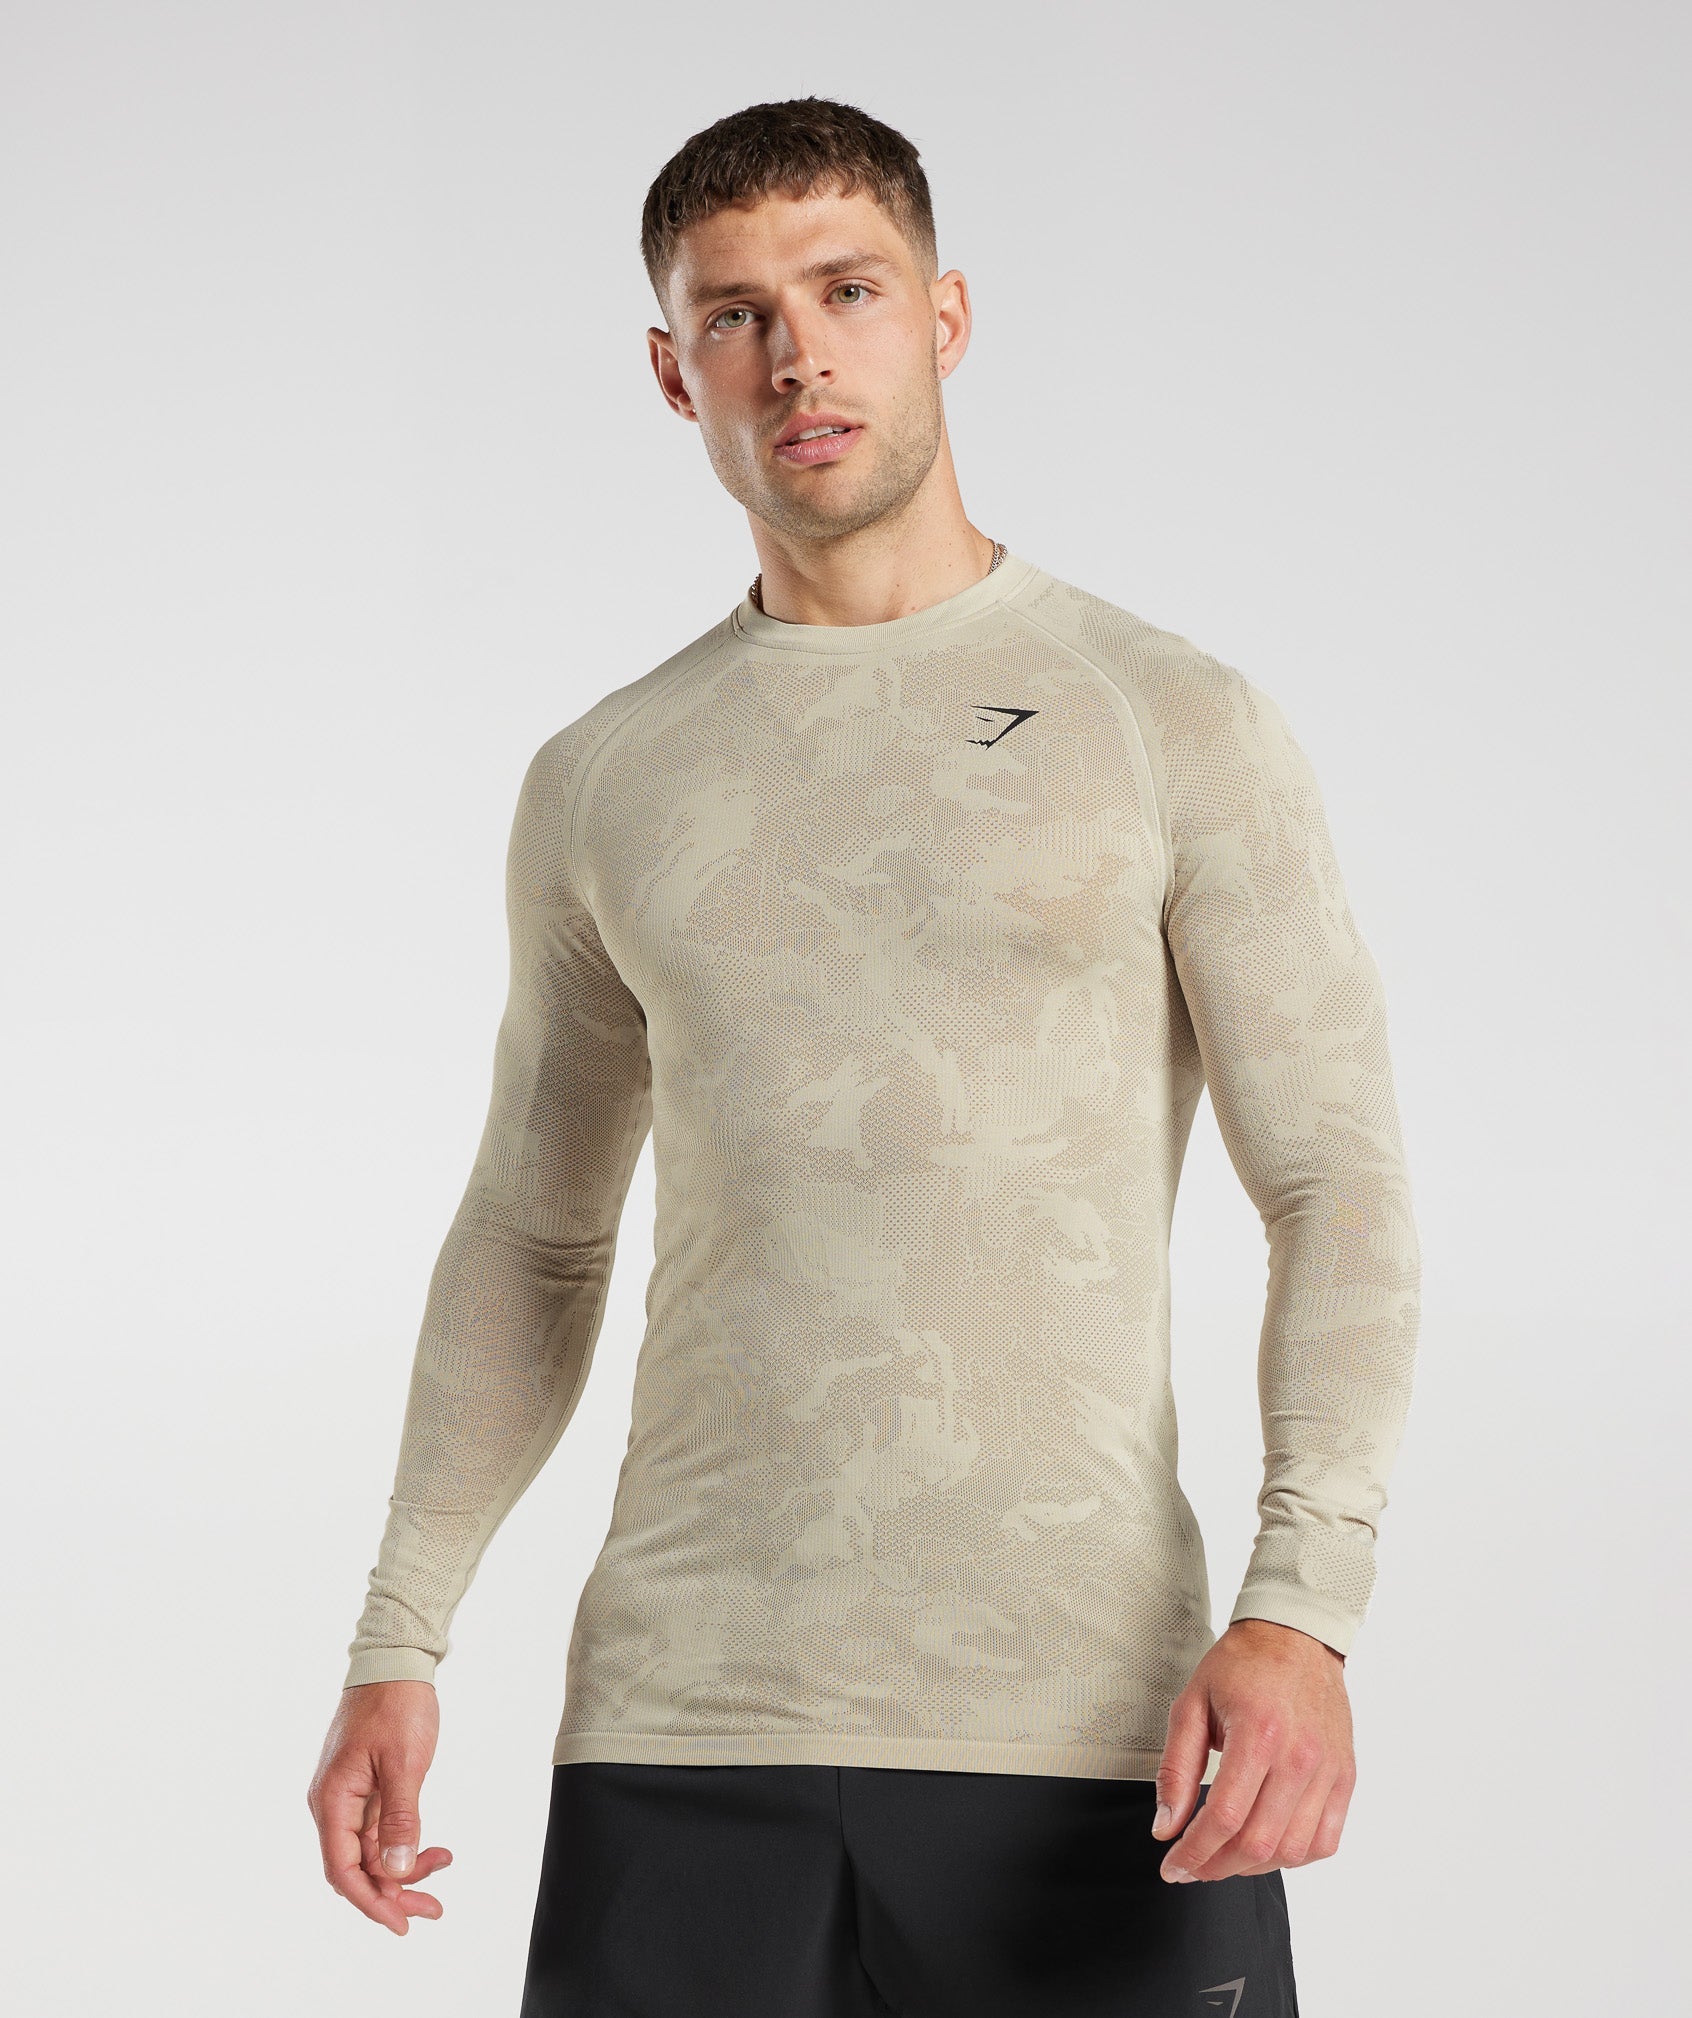 Gymshark Geo Seamless Long Sleeve T-Shirt - White/Light Grey